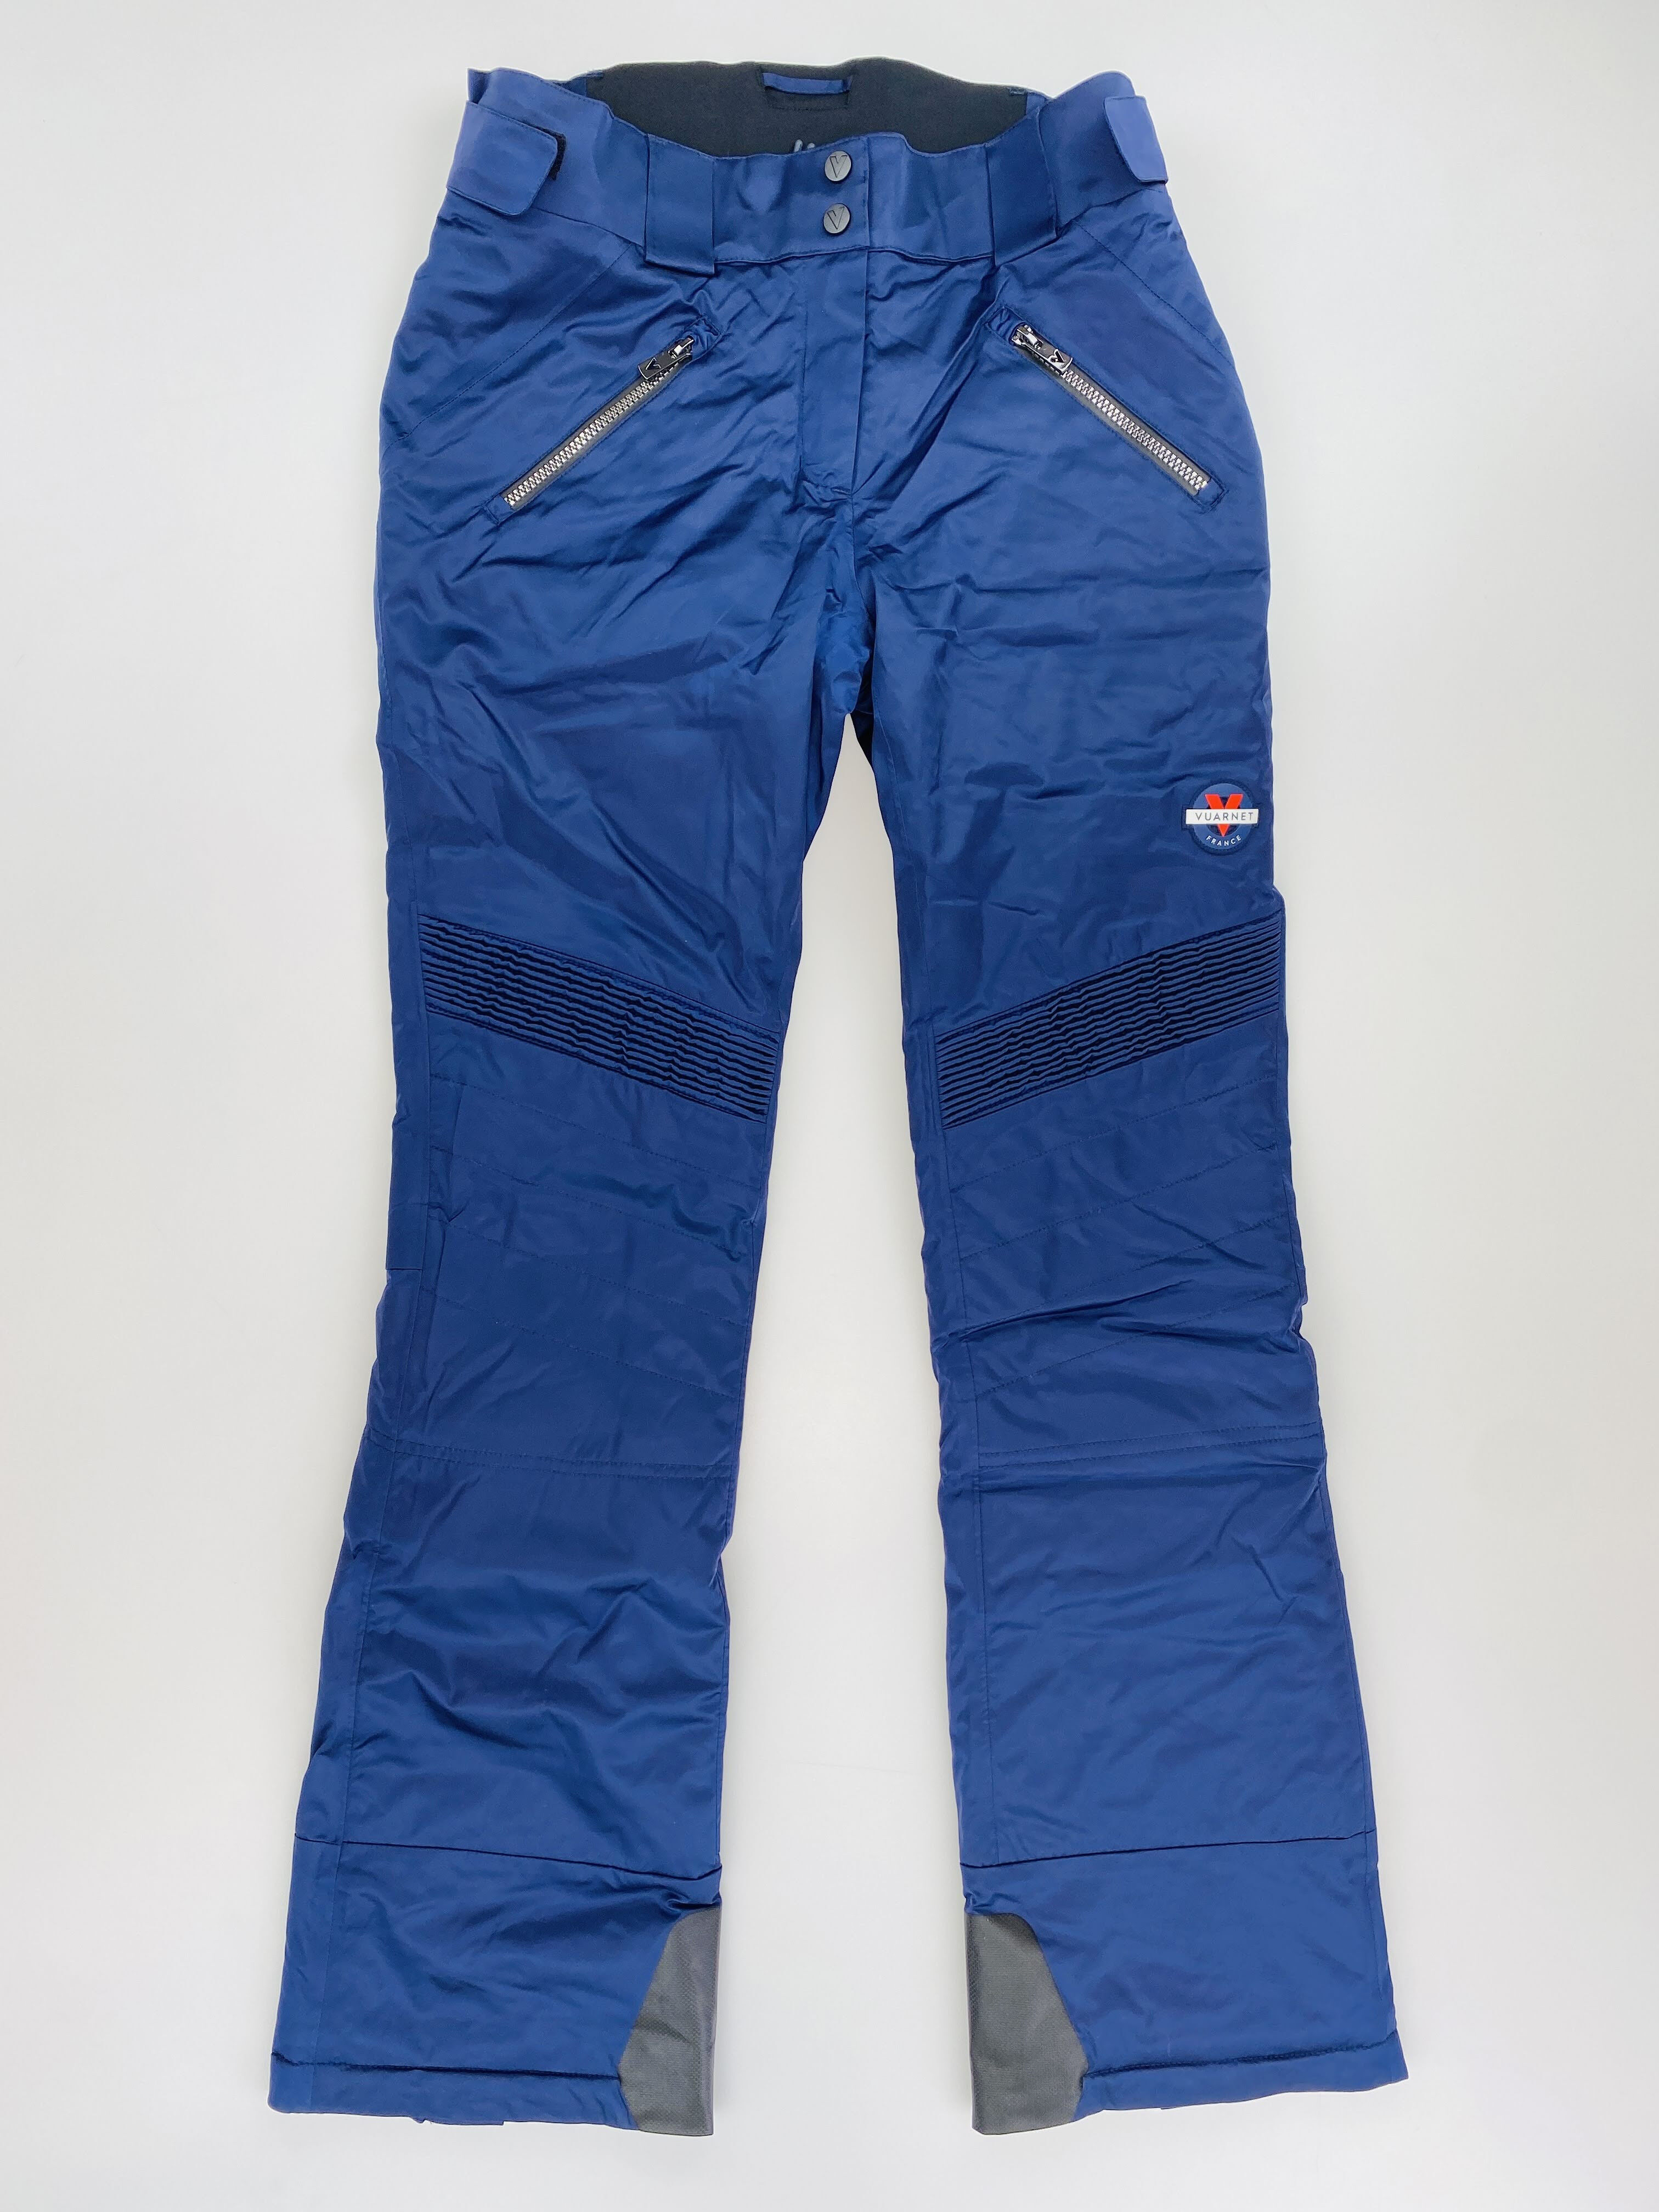 Vuarnet W'S Yakima Pant - Second Hand Ski trousers - Women's - Blue - S | Hardloop